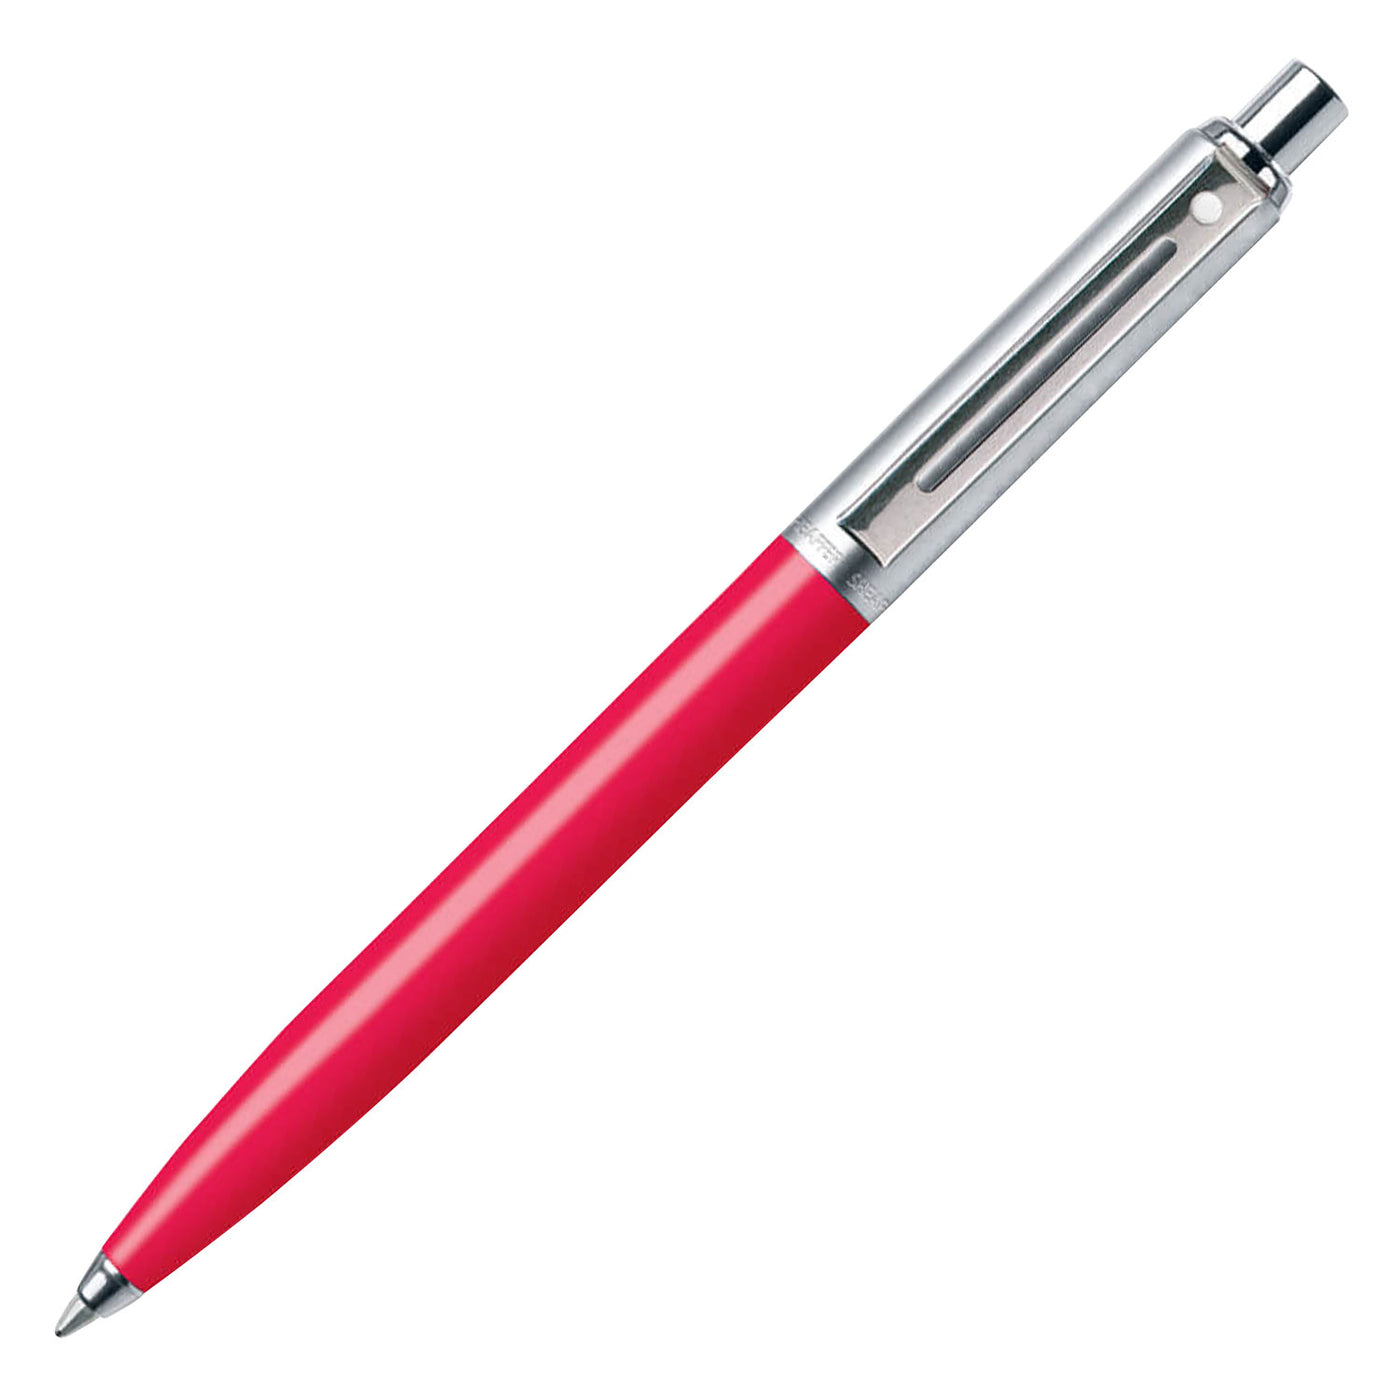 Sheaffer Sentinel Ball Pen - Pink & Brushed Chrome 1